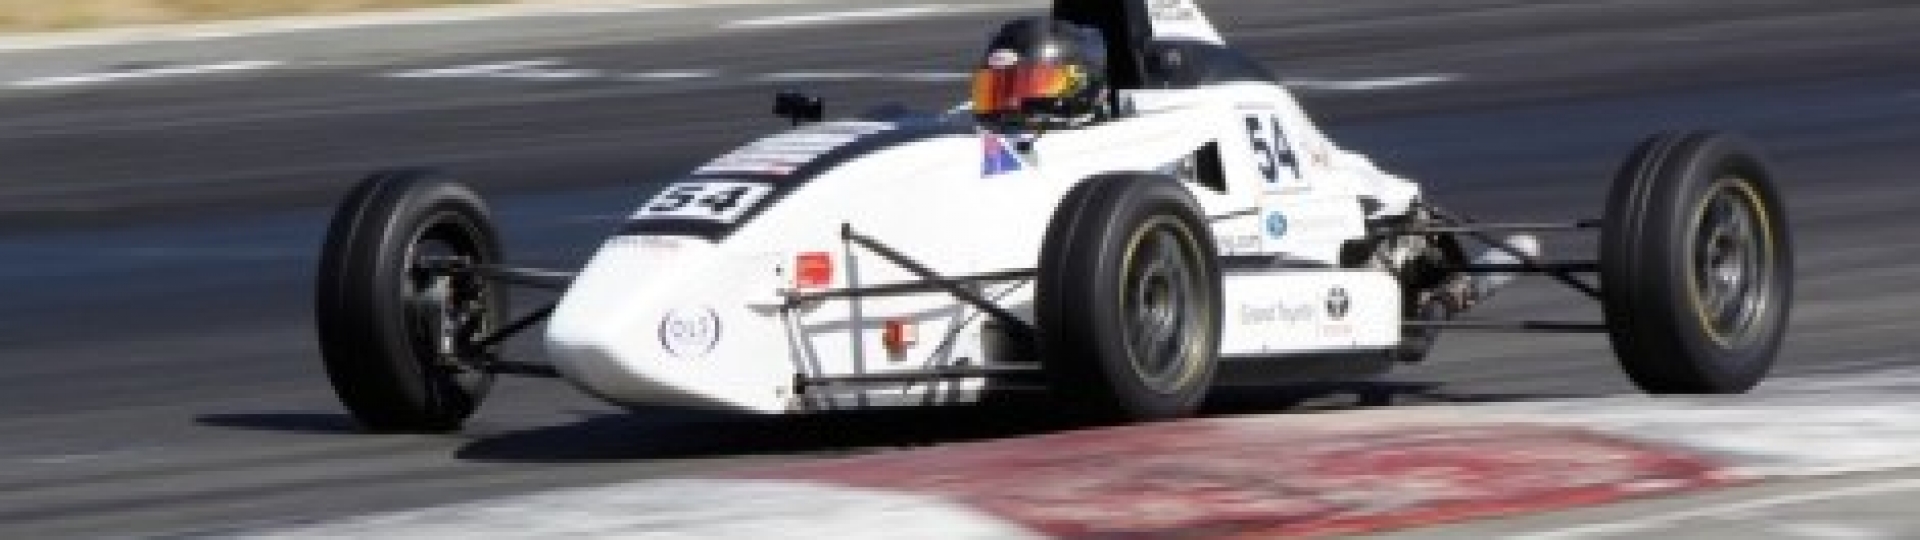 Calan Williams racing pole position